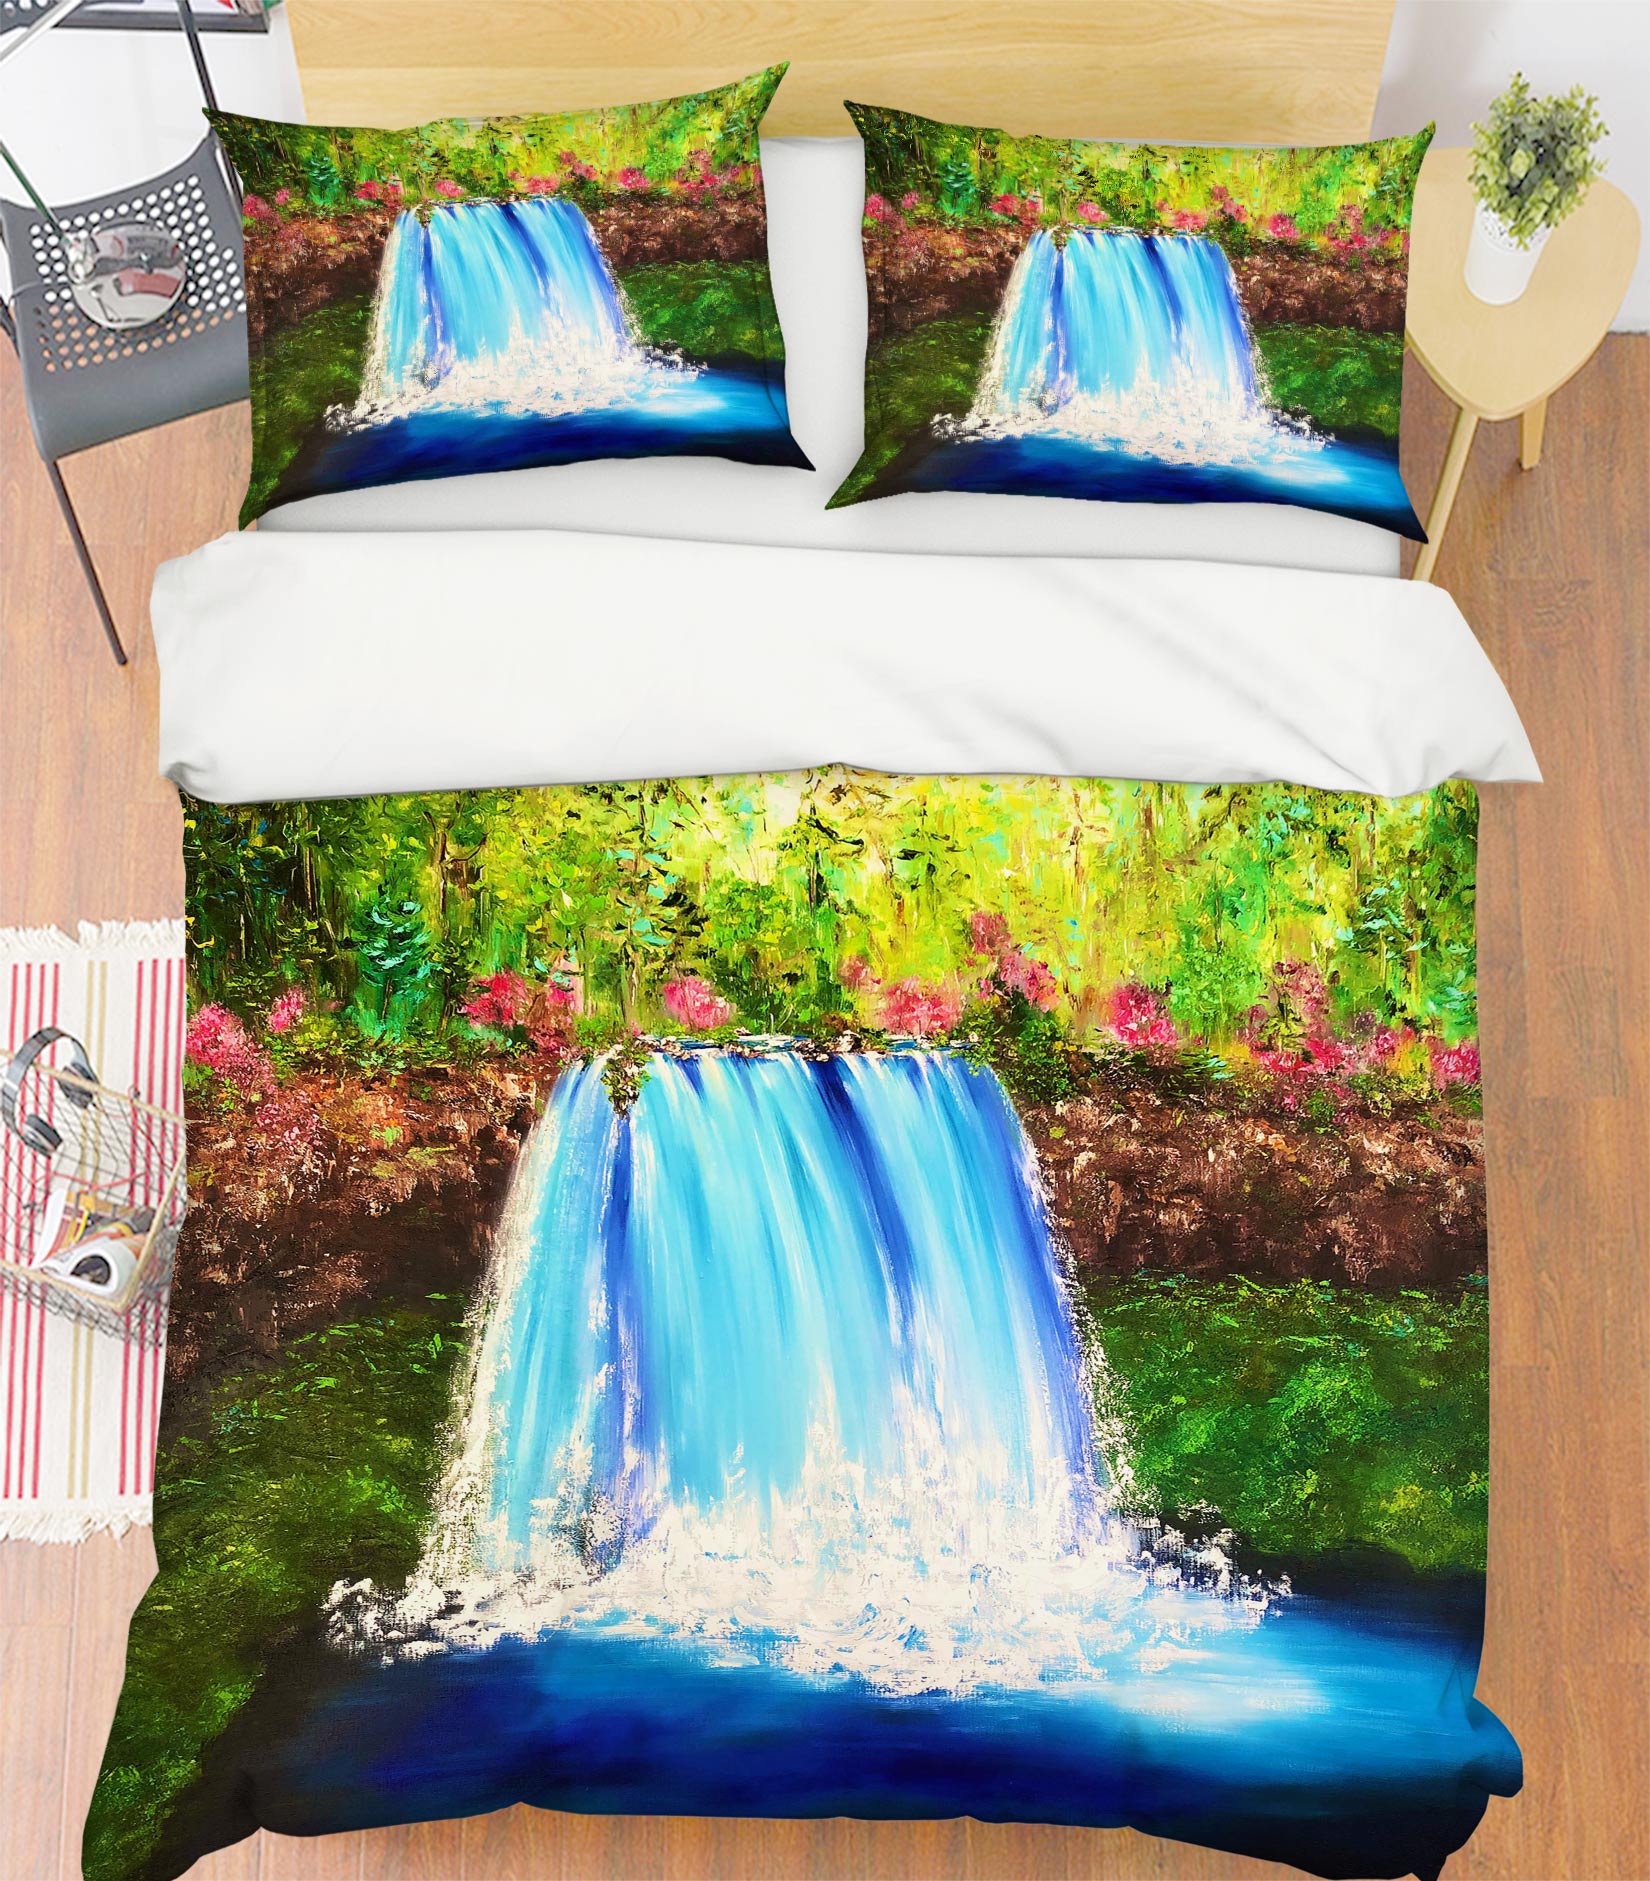 3D Blue Waterfall 516 Skromova Marina Bedding Bed Pillowcases Quilt